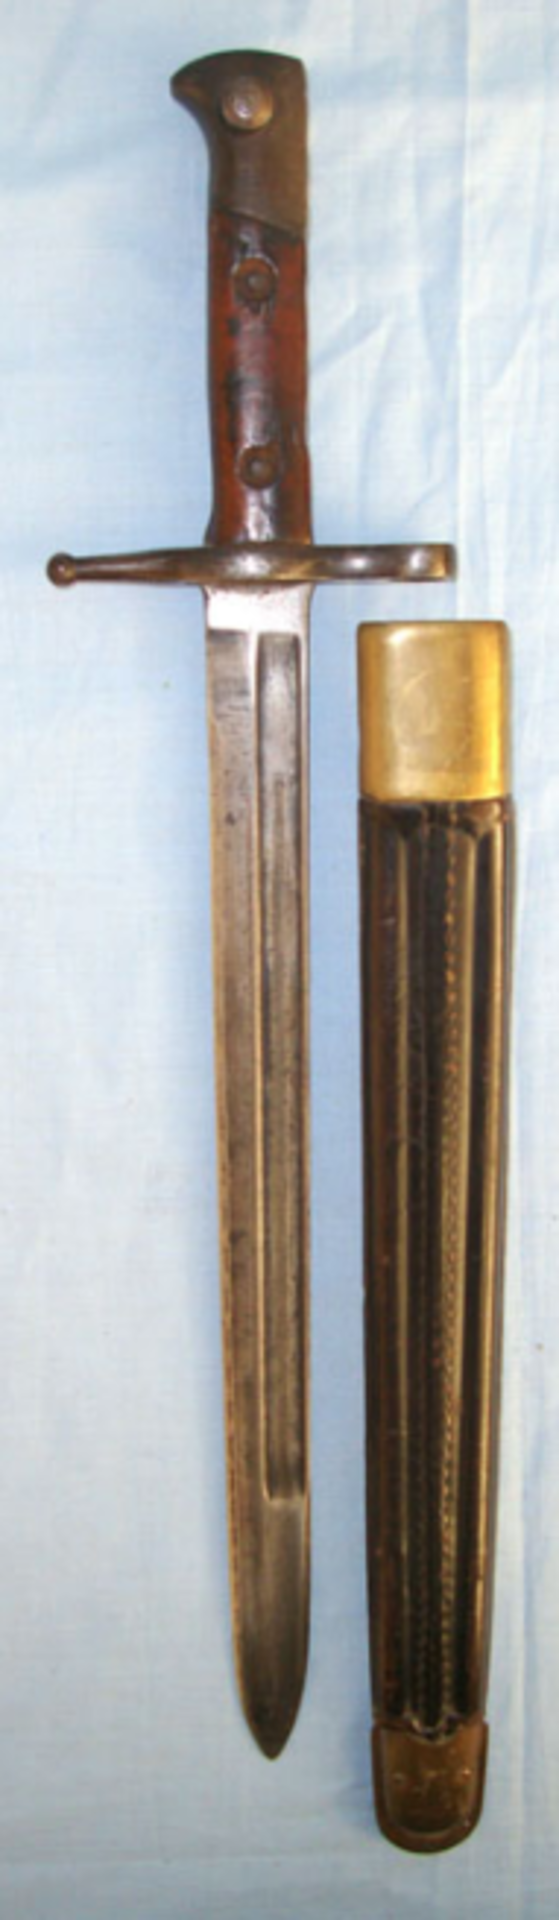 WW1 & WW2 Era Italian Model 1891 Mannlicher Carcano Rifle Sword Bayonet & Leather Scabbard - Image 3 of 3